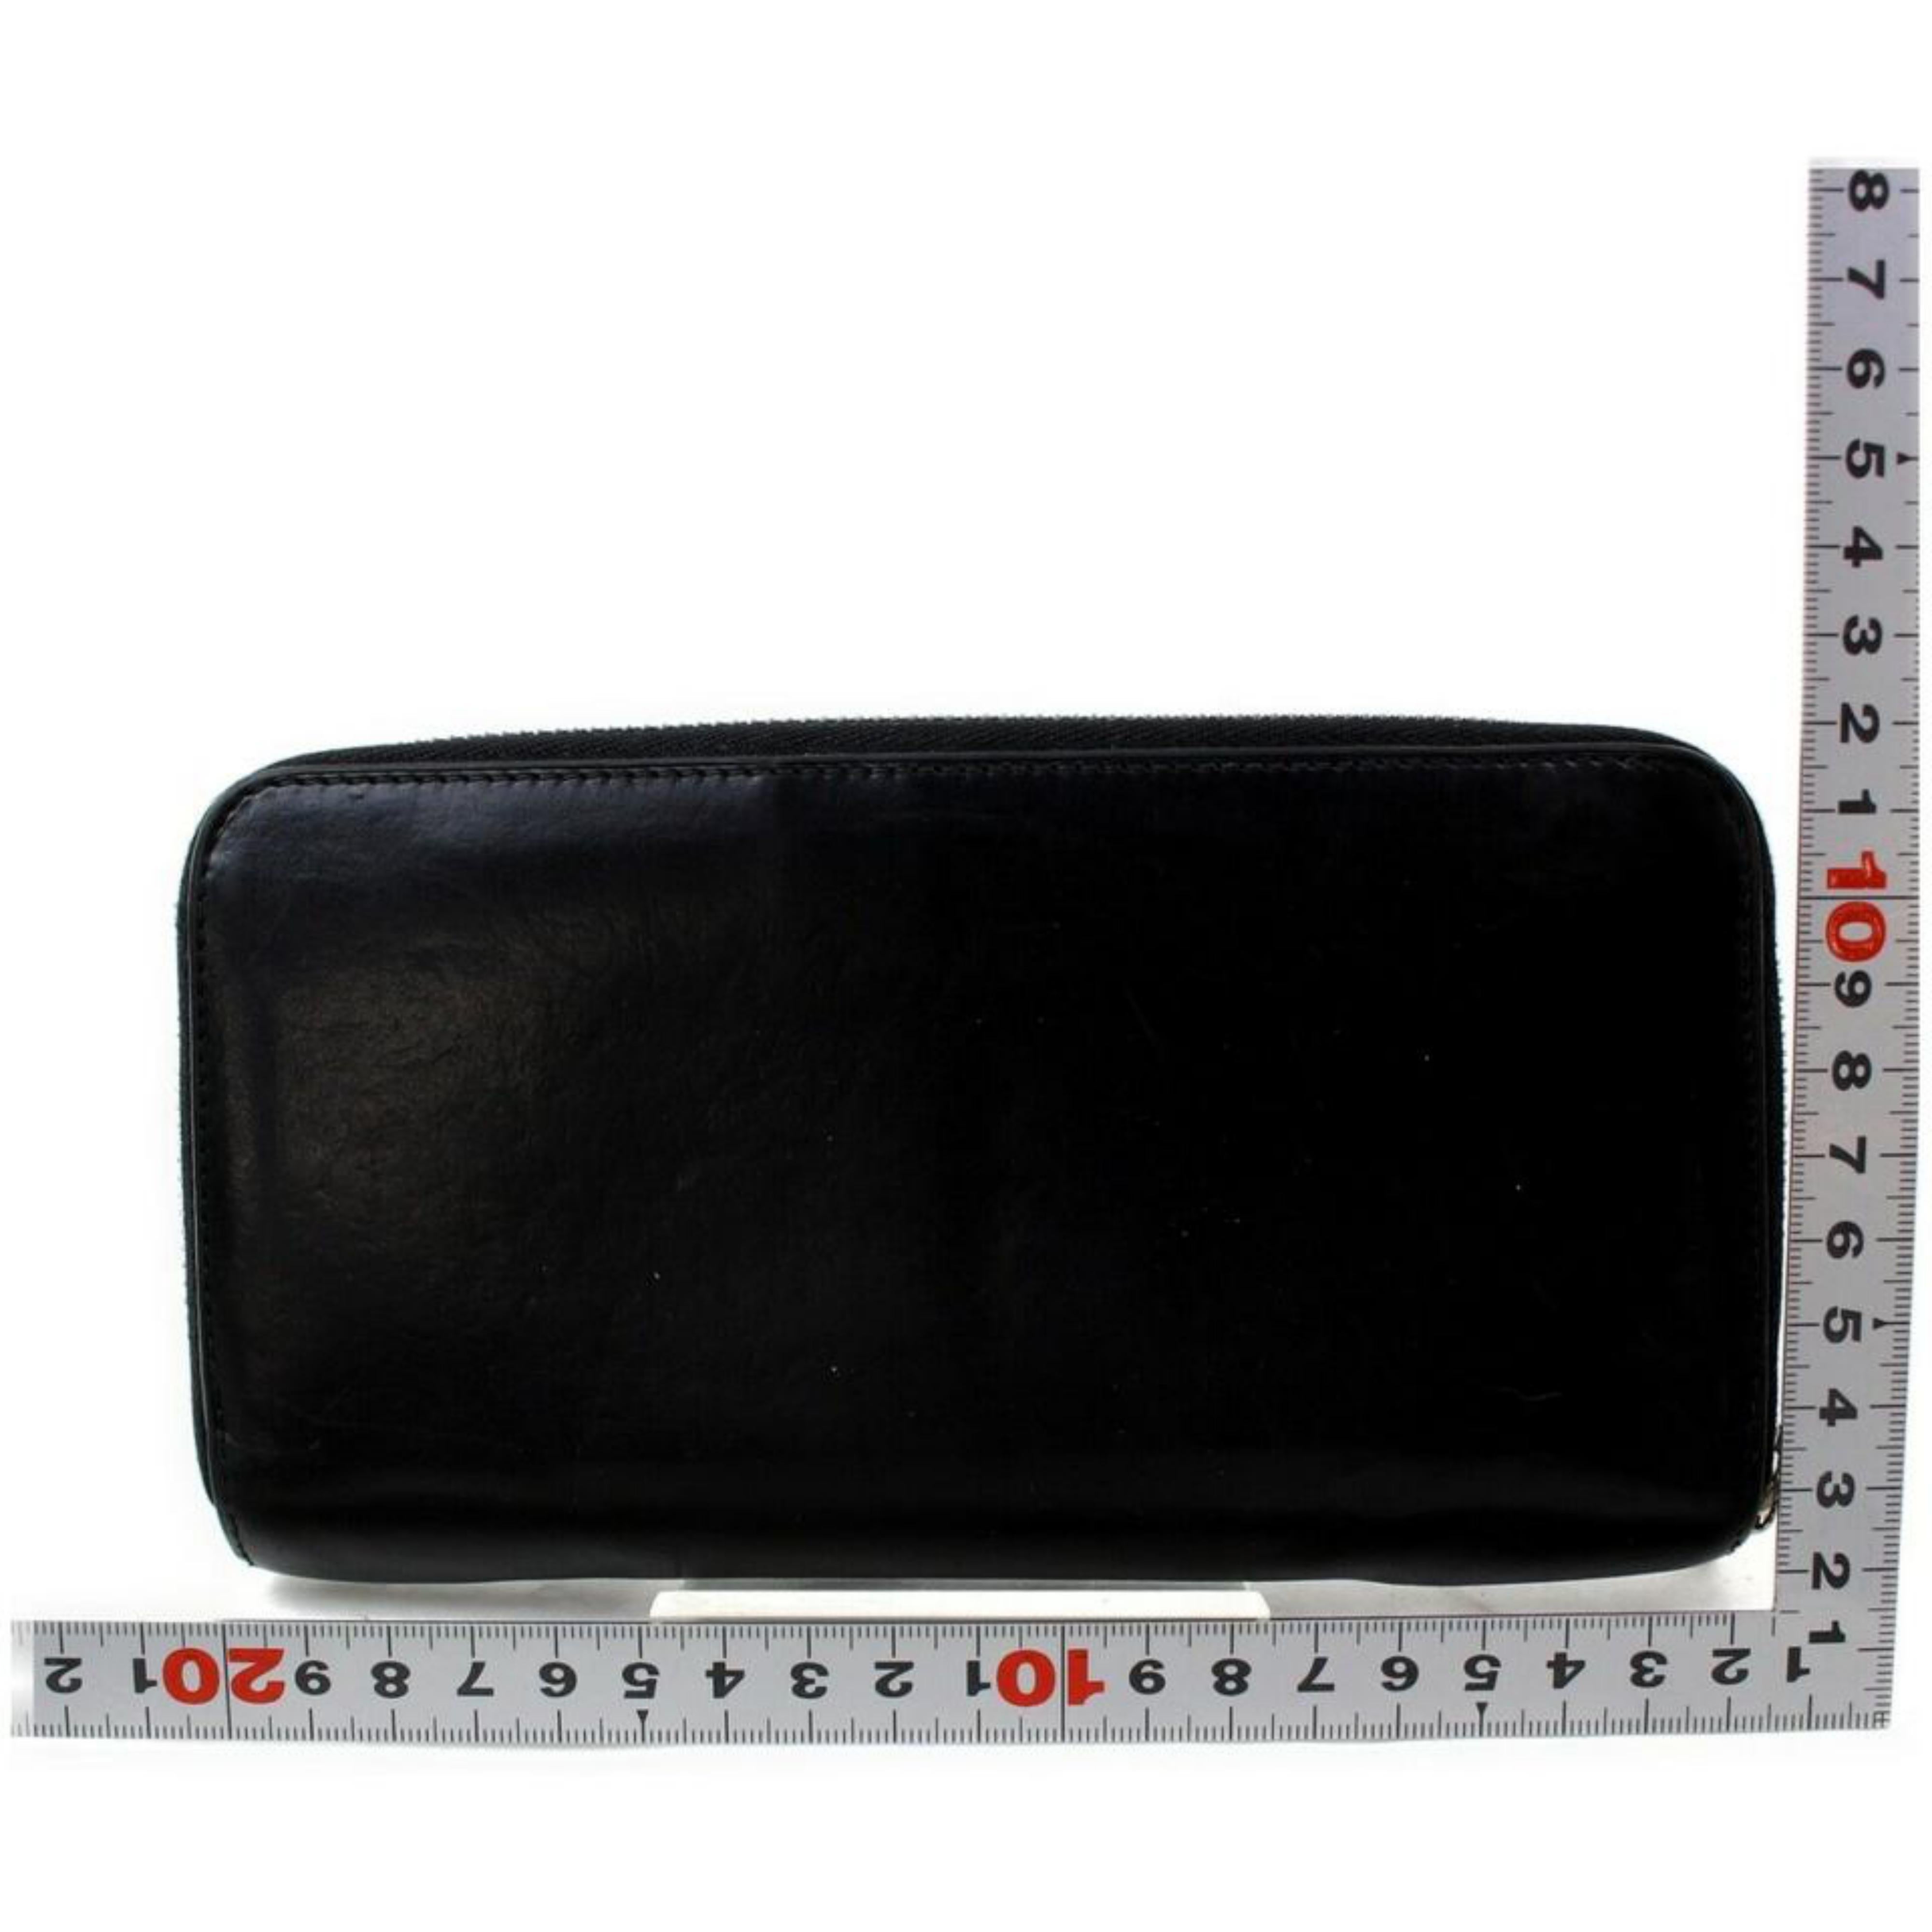 Louis Vuitton Black Calf Leather Zippy Zip Around Long Wallet 856954
Width (inch) : 7.67 inch(approx)
Width (cm) : 19.5 cm(approx)
Height (inch) : 4.13 inch(approx)
Height (cm) : 10.5 cm(approx)
Depth (inch) : 0.78 inch(approx)
Depth (cm) : 2